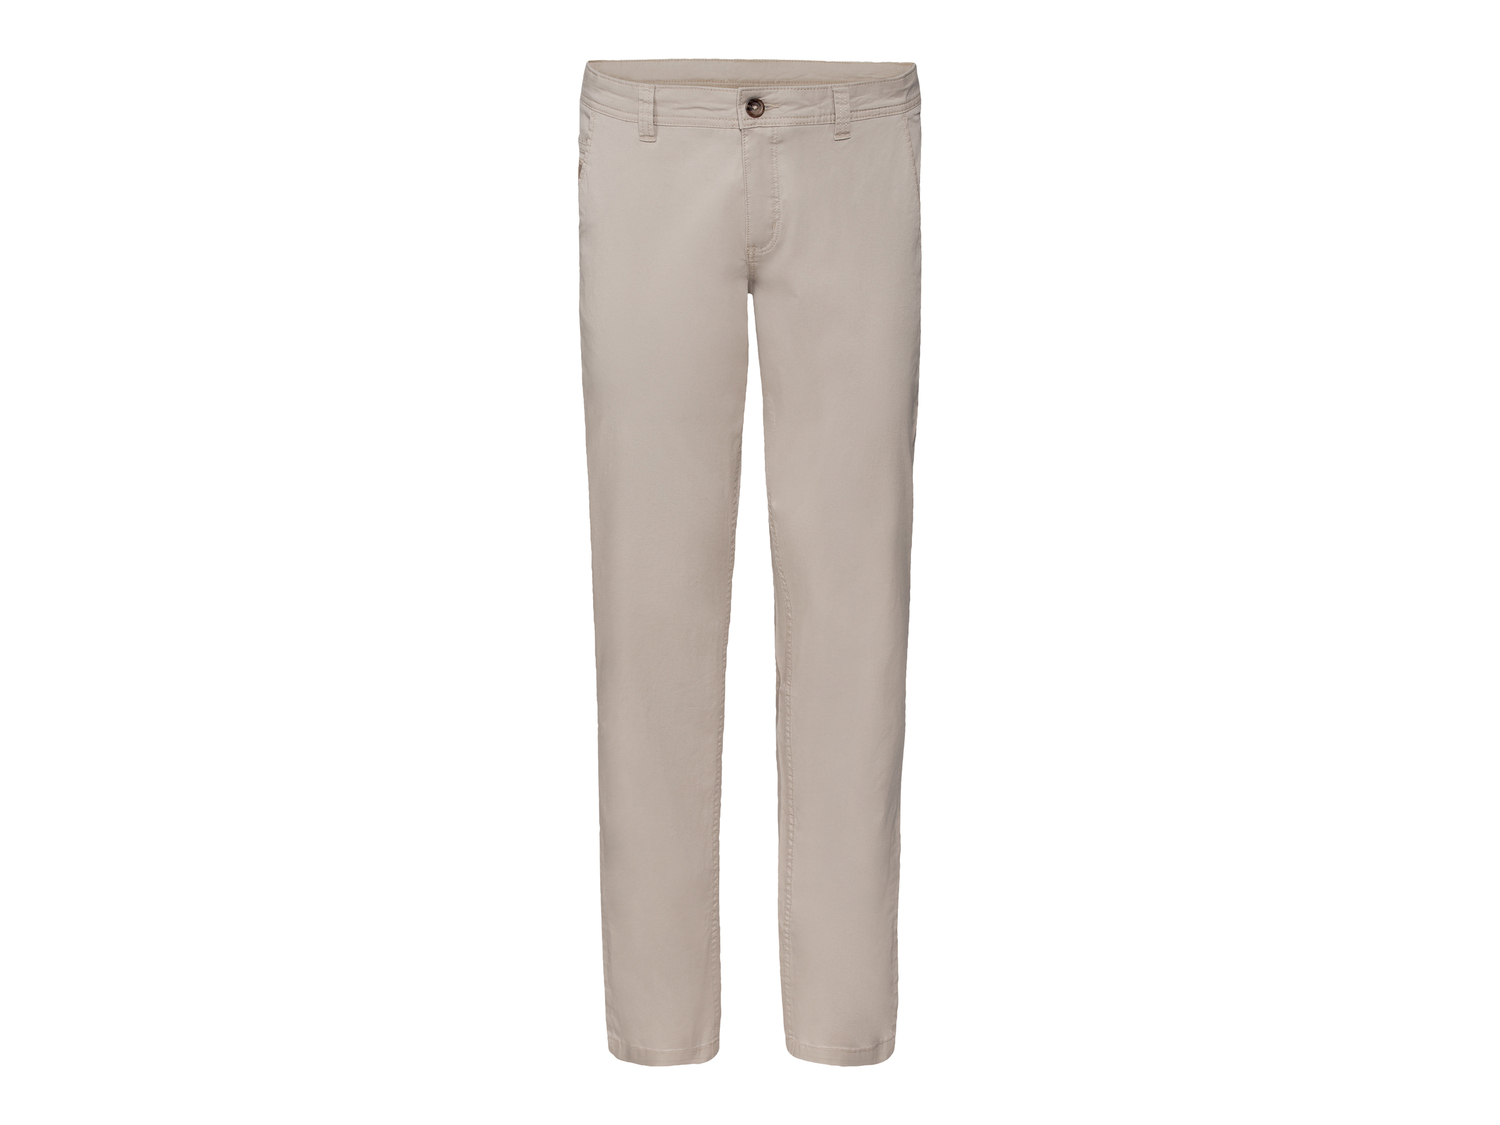 Pantaloni Chino Slim Fit da uomo Livergy, prezzo 9.99 &#8364; 
Misure: 46-54
Taglie ...